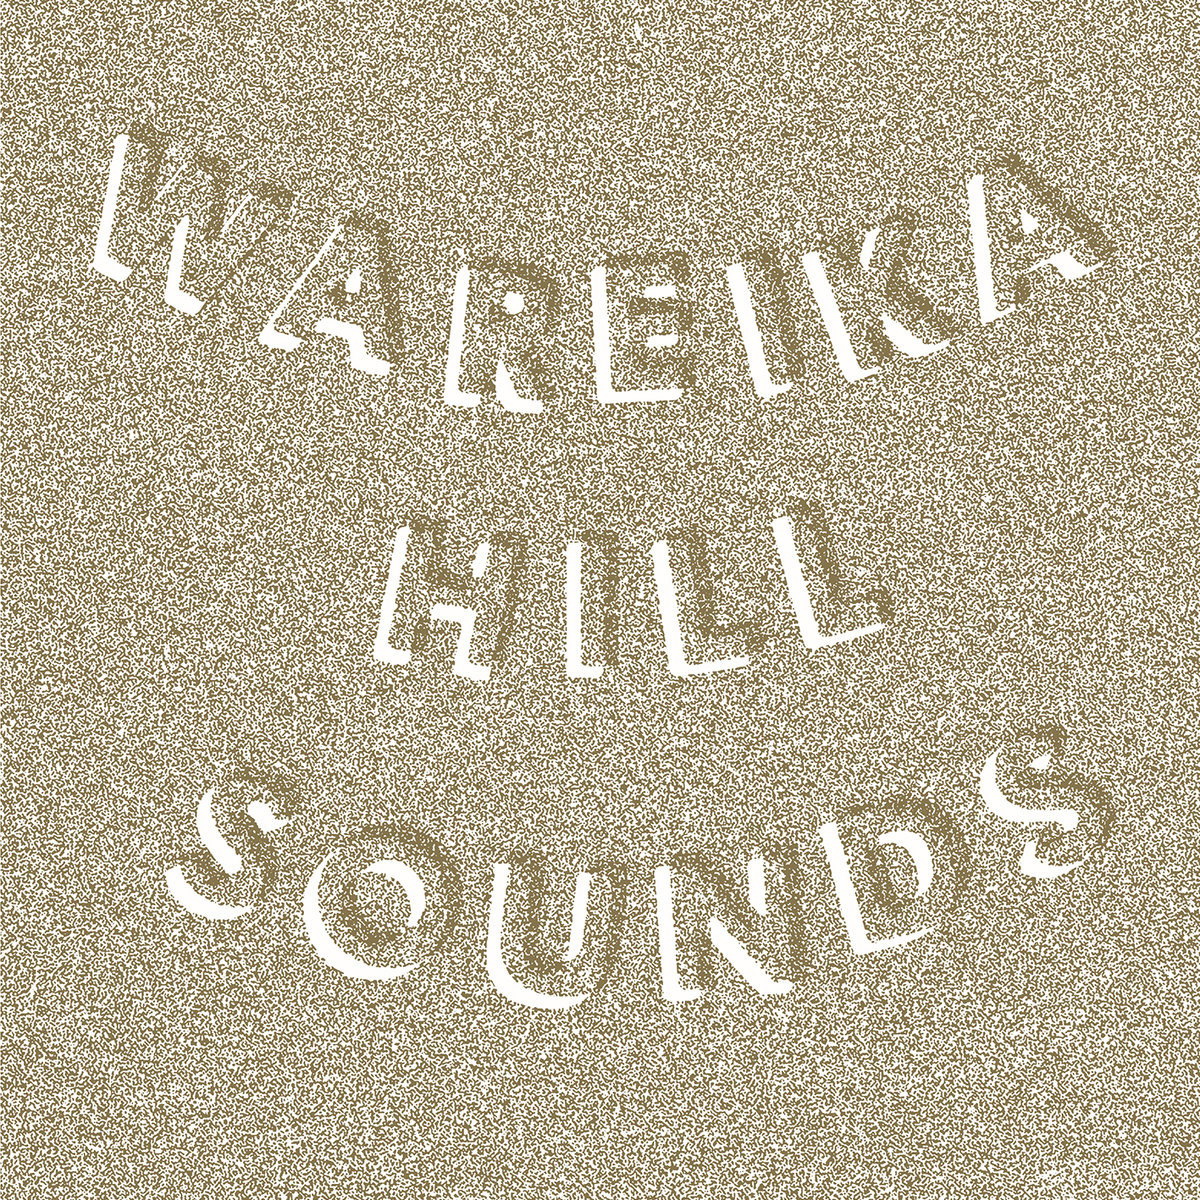 WAREIKA HILL SOUNDS - Mass Migration (10")